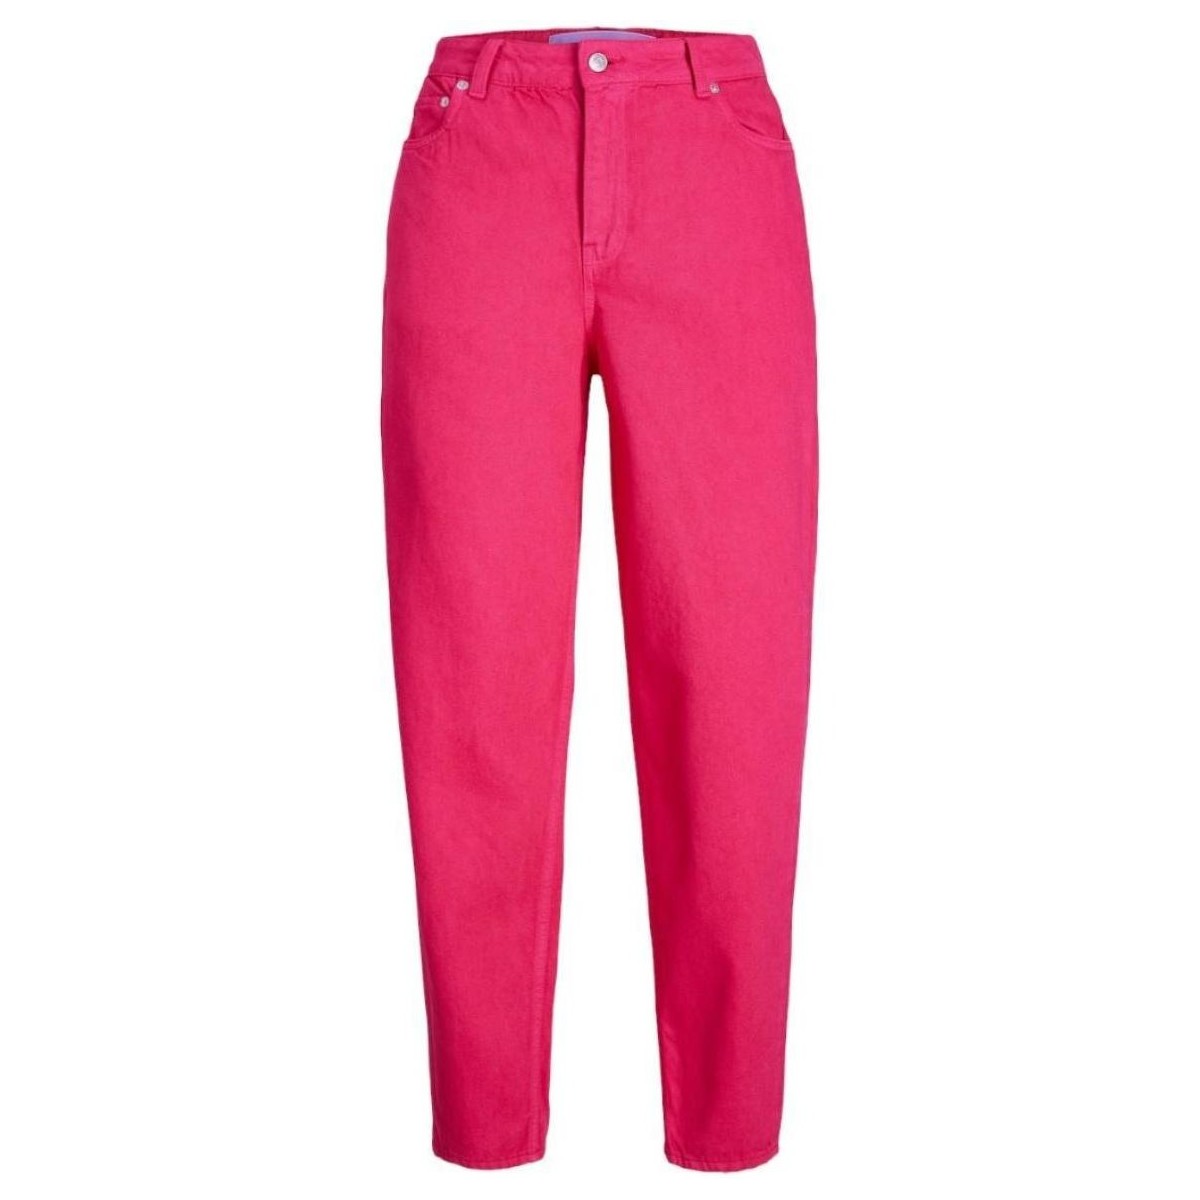 textil Mujer Pantalones Jjxx 12206786 Rosa